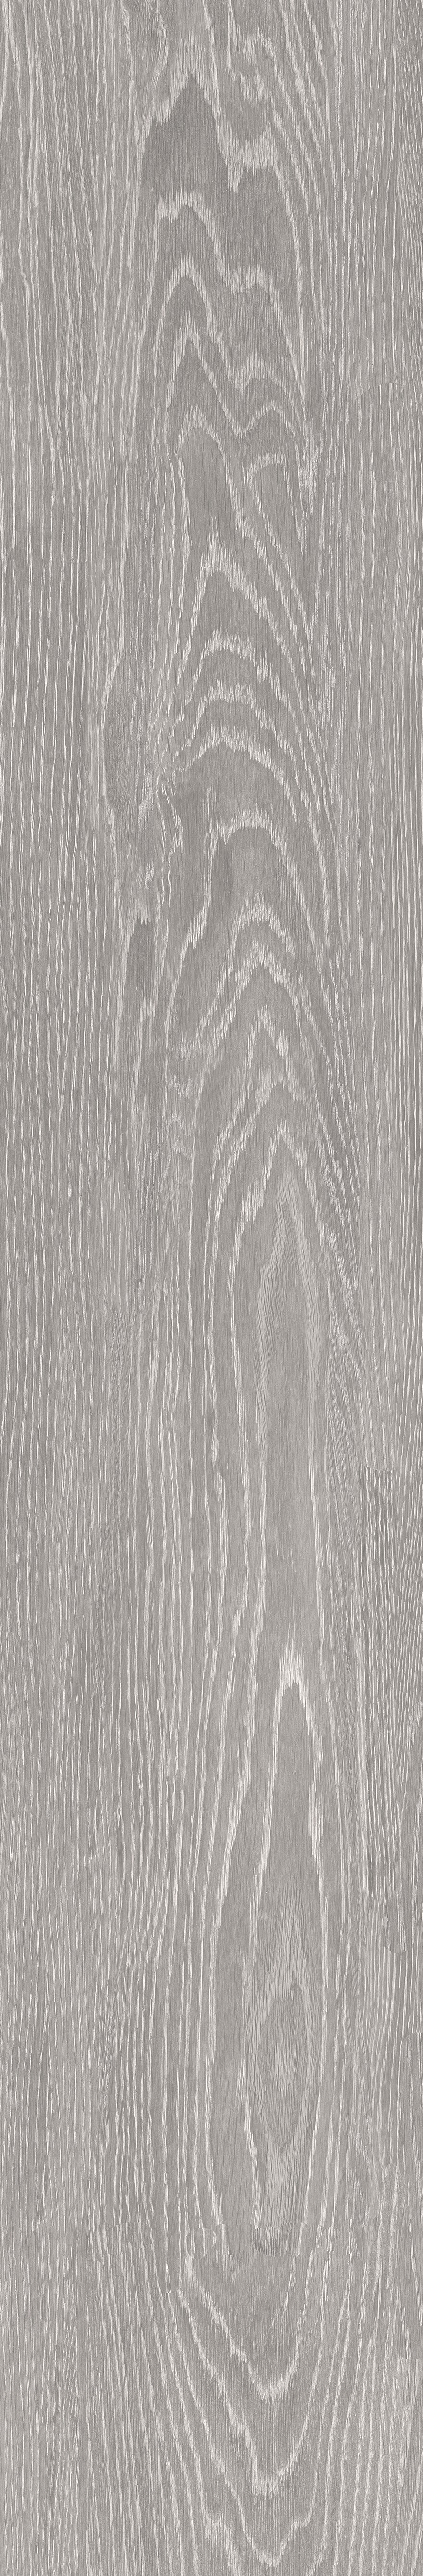 Giania 木紋磚 Bm122803m